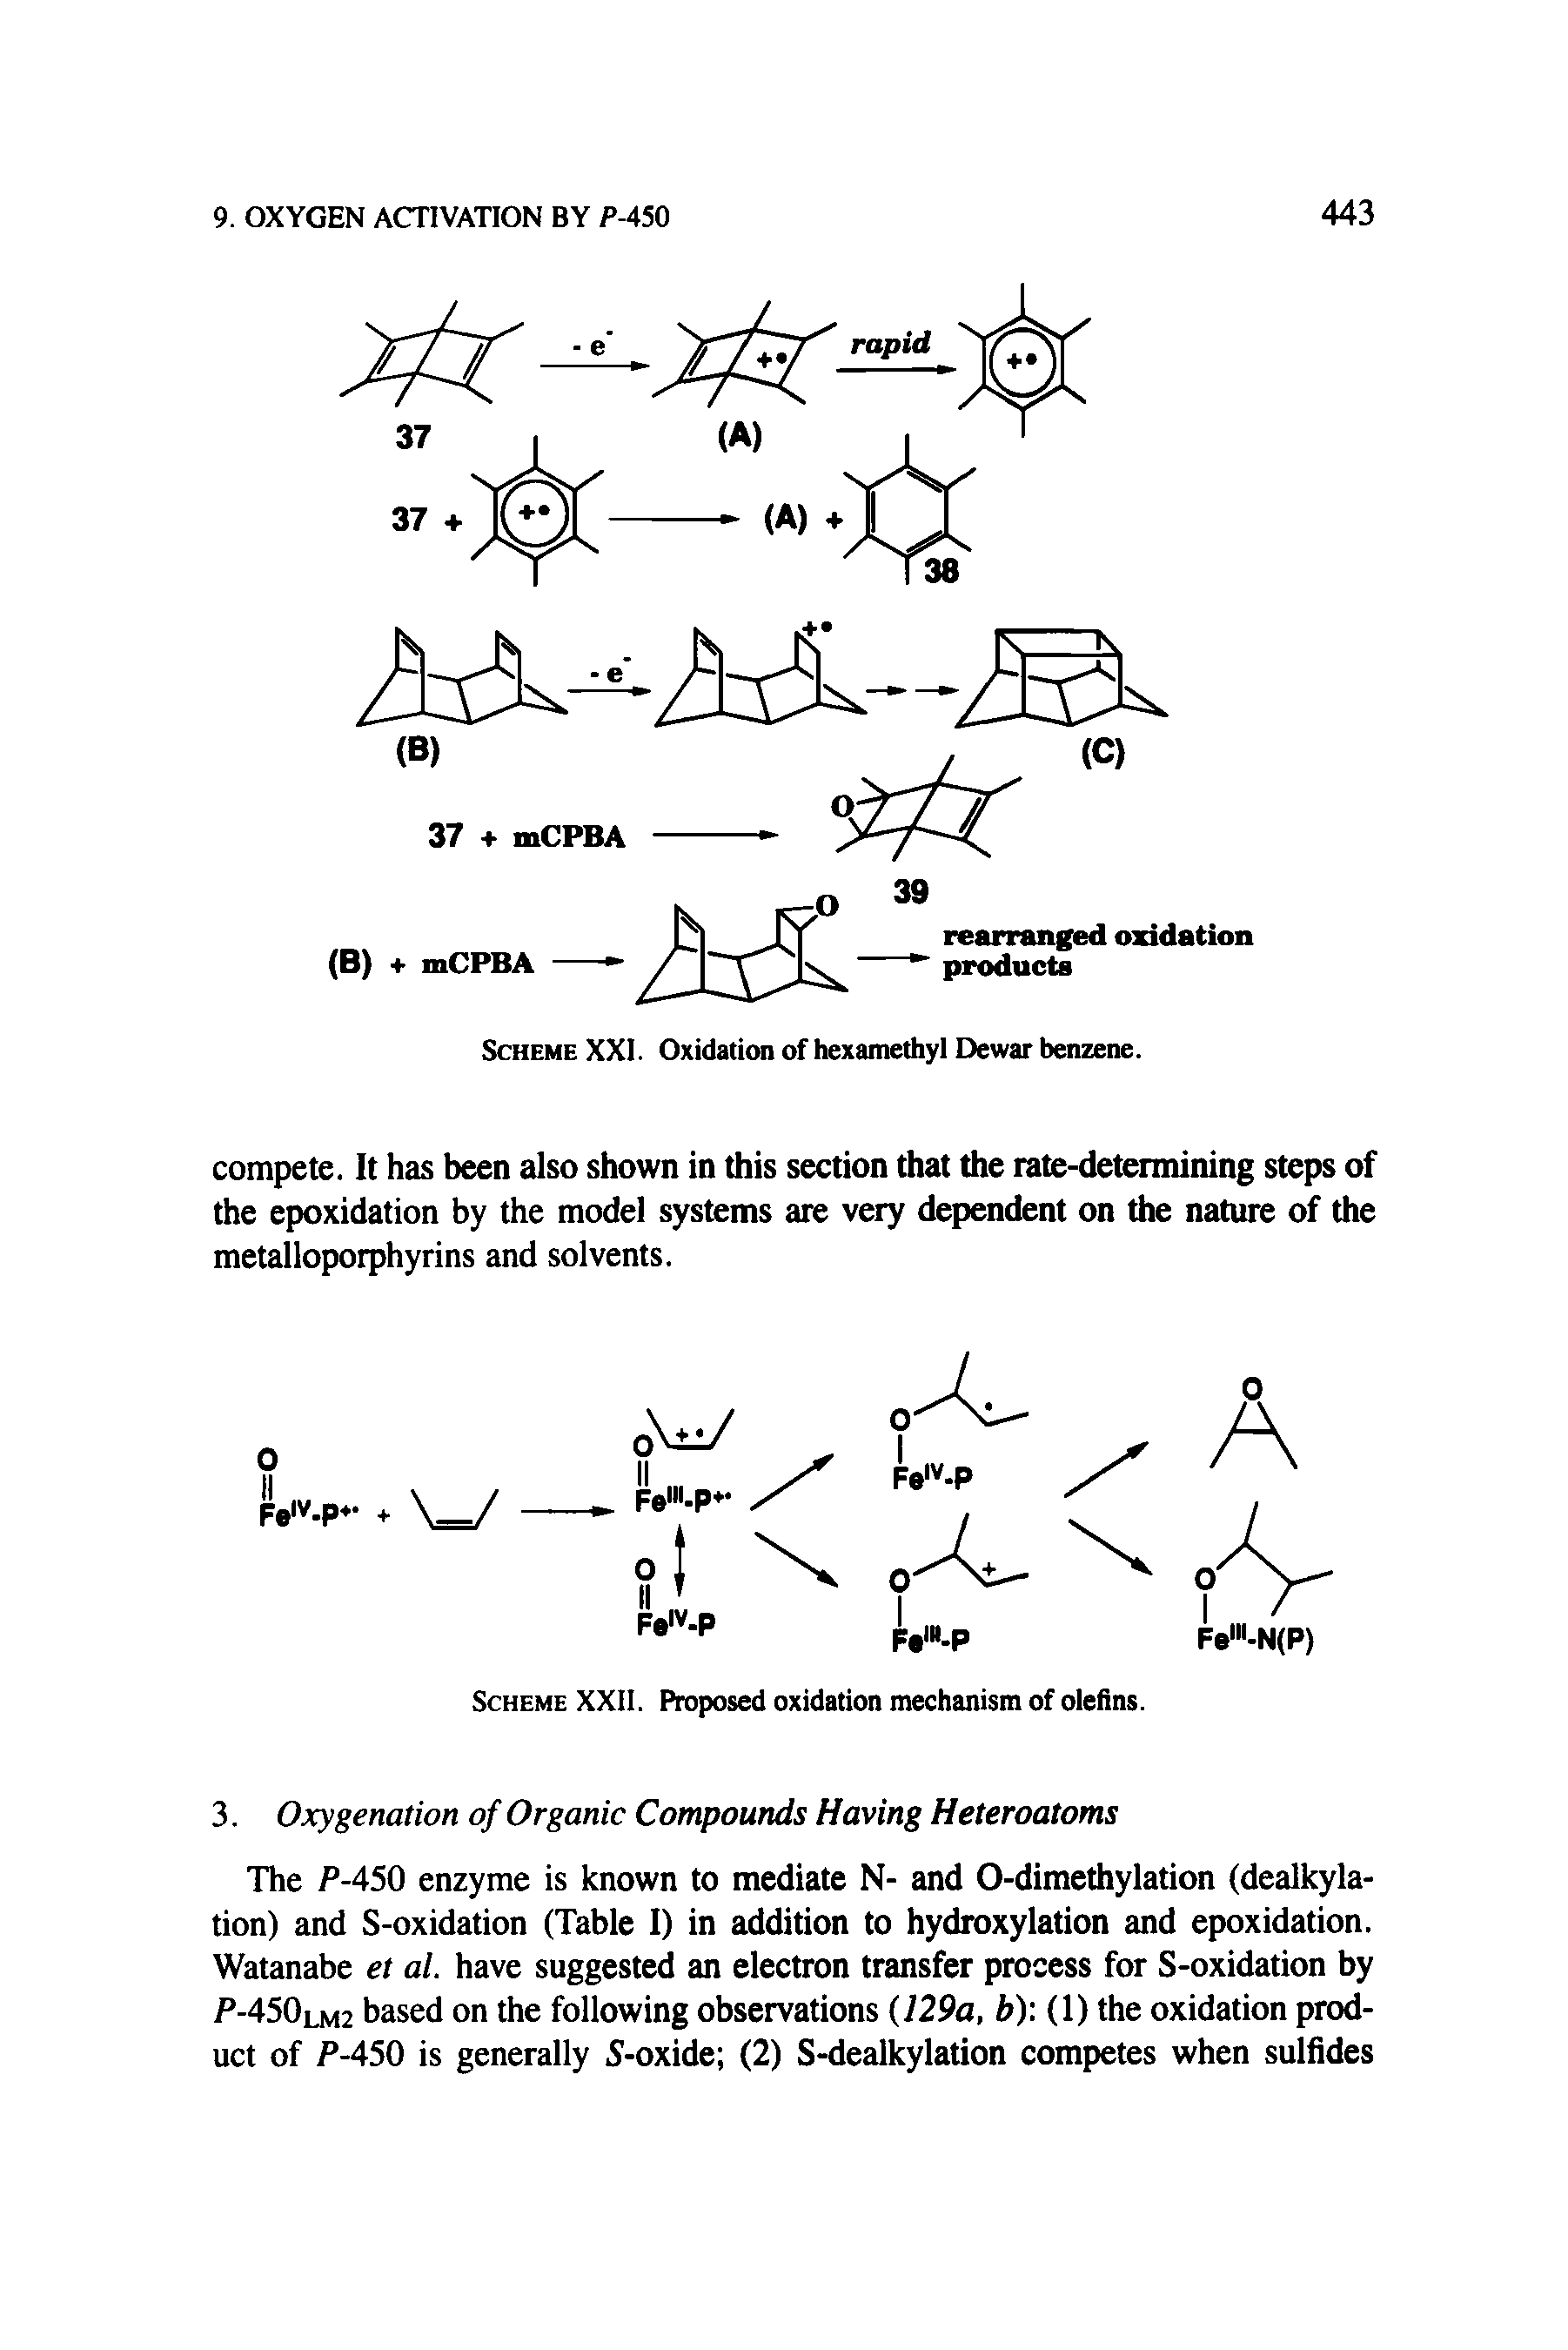 Scheme XXII. Proposed oxidation mechanism of olefins.